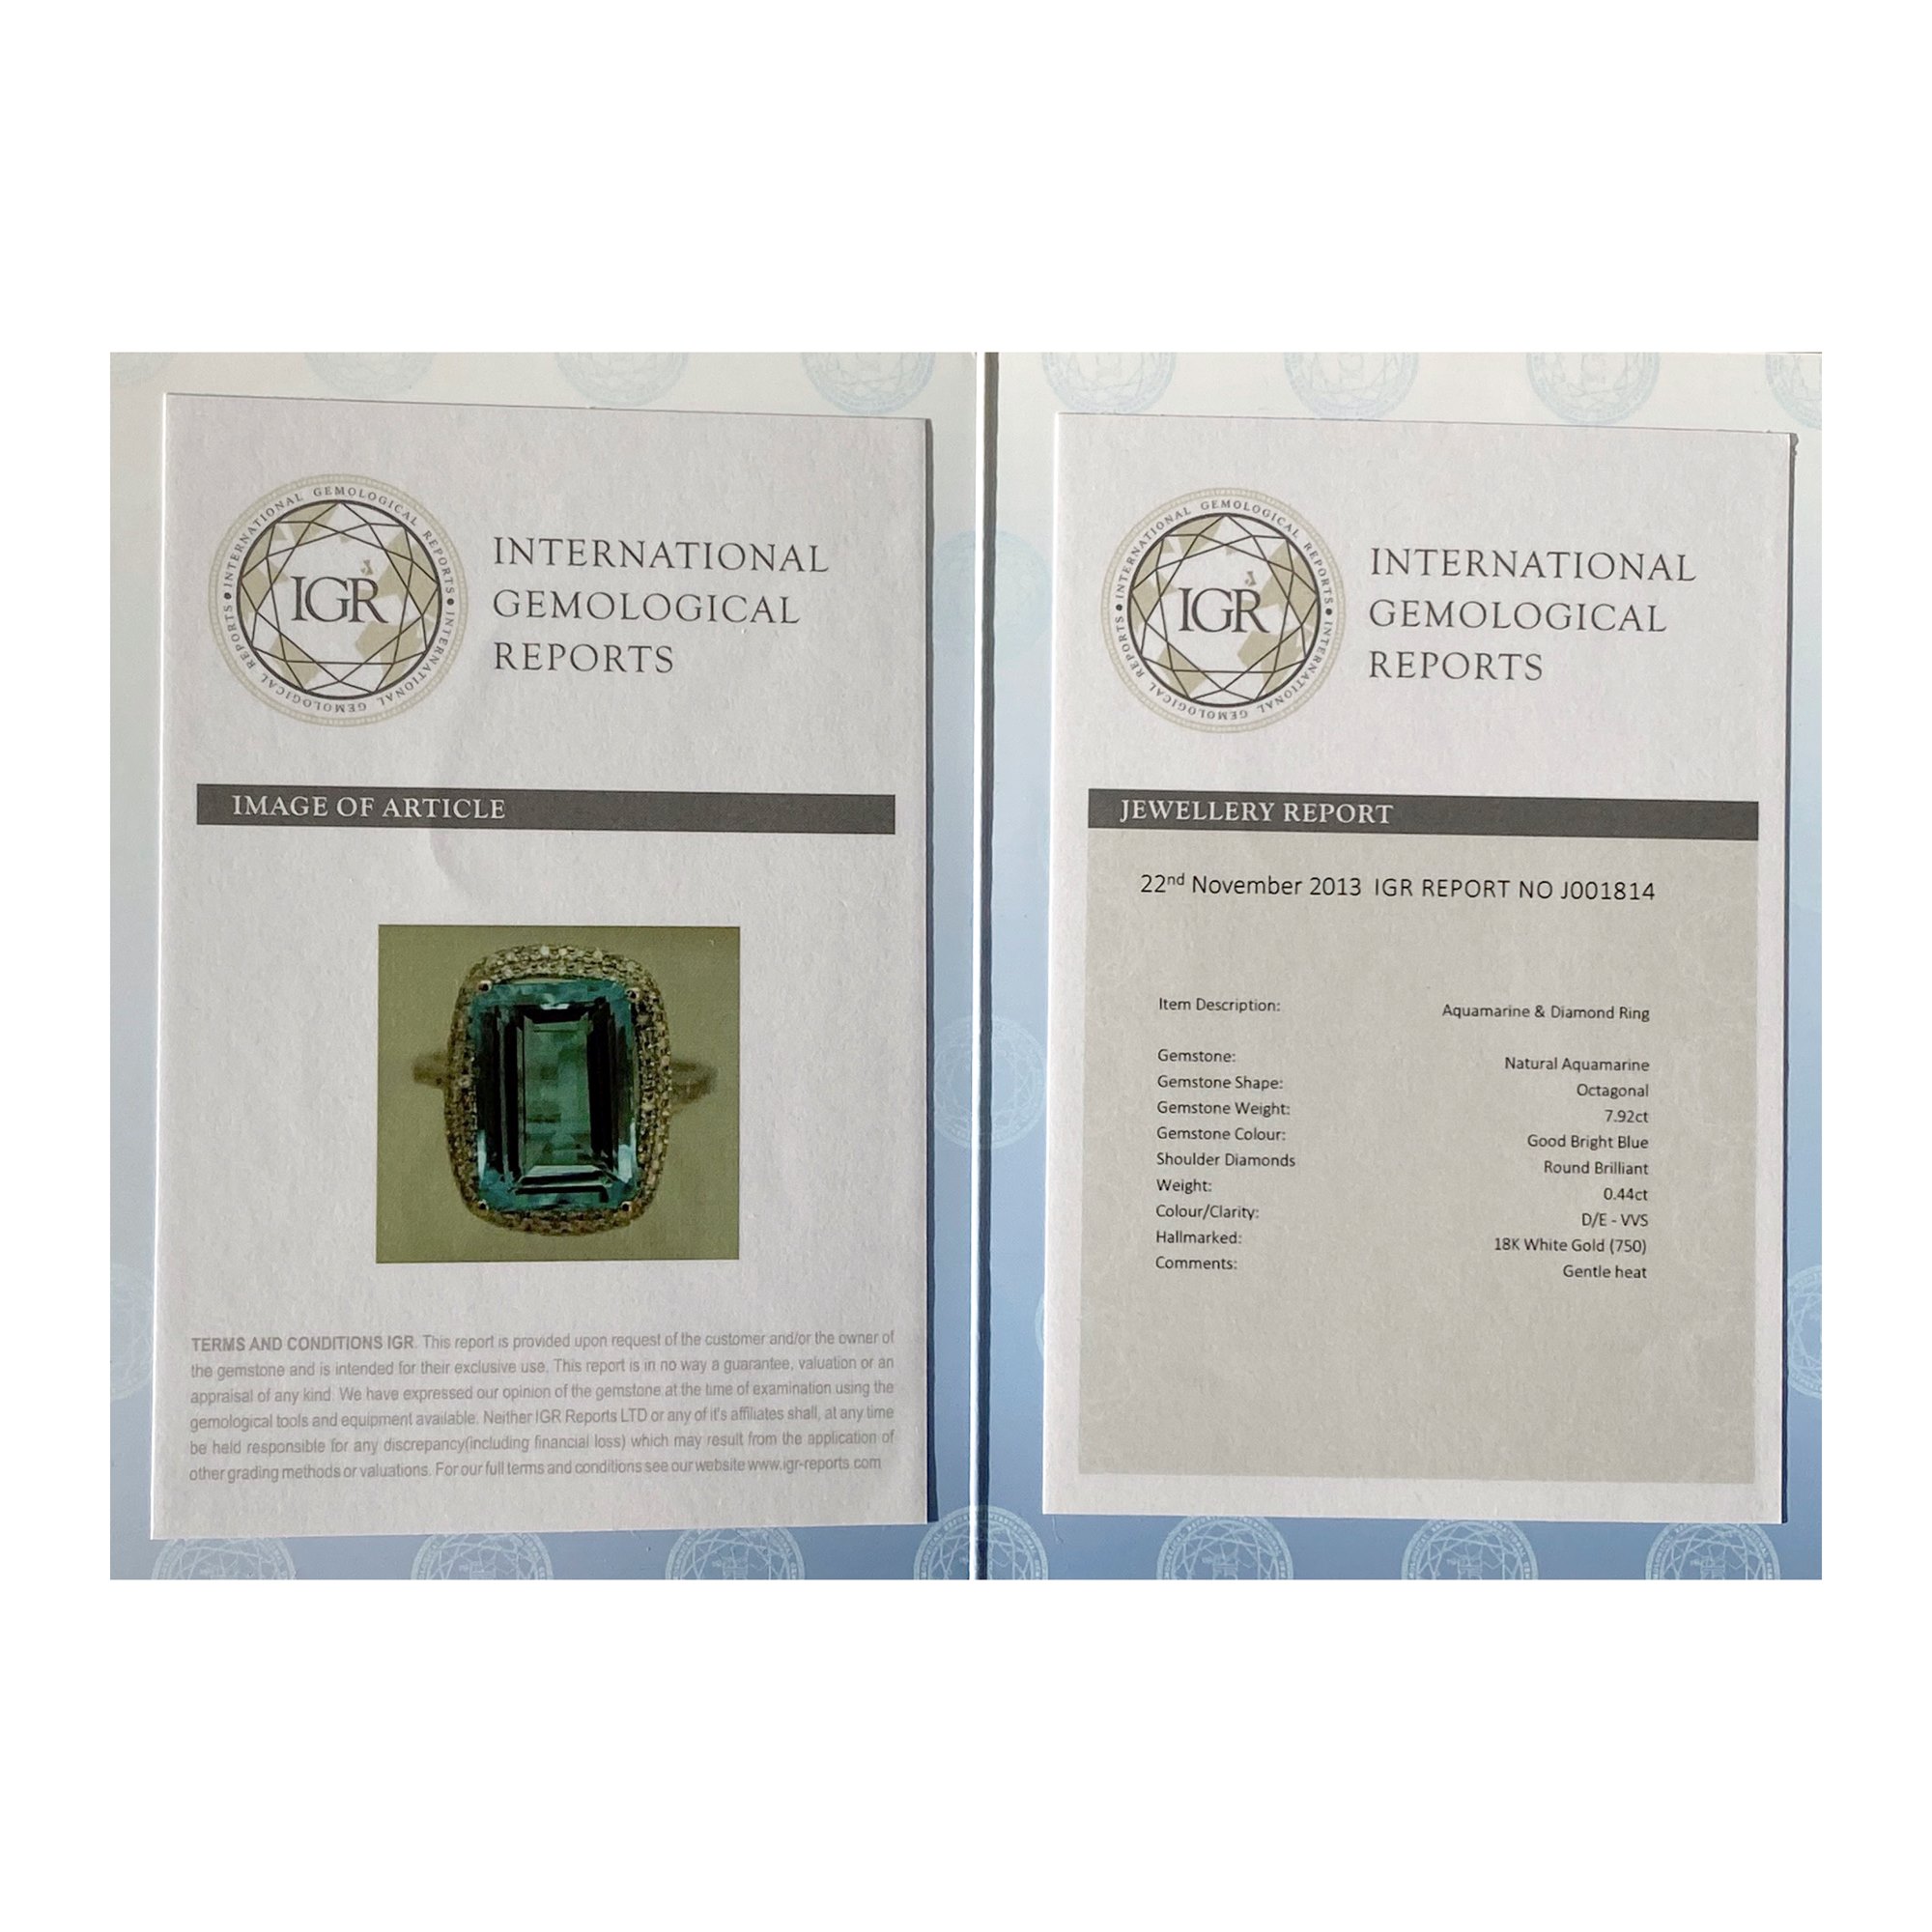 David Jerome Certified 7.92ct Octagonal Aquamarine and Diamond 18ct gold Ring